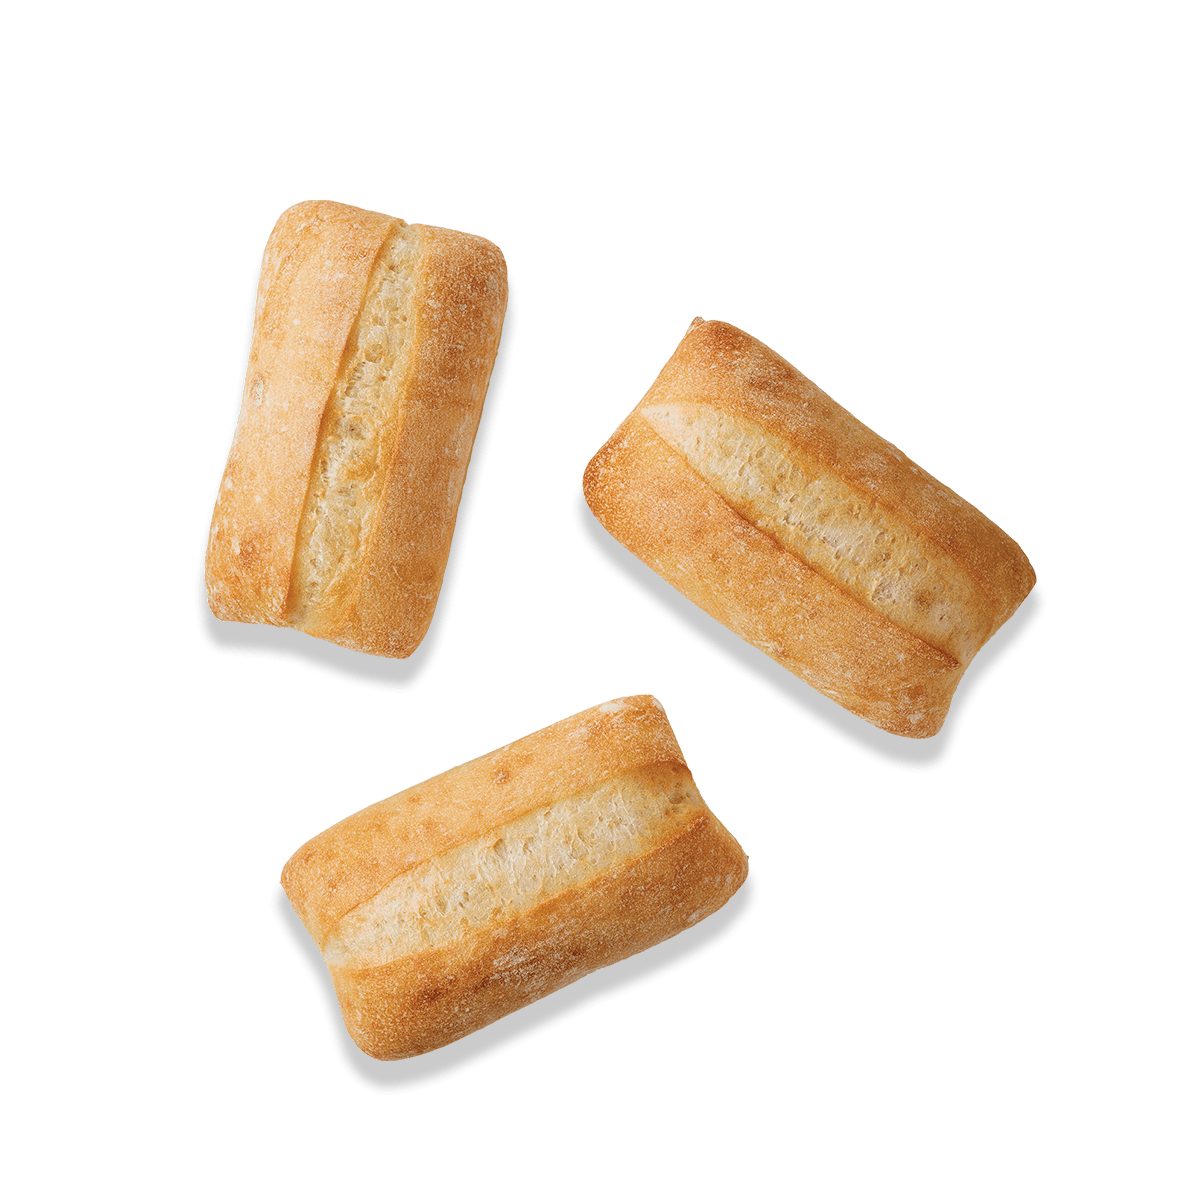 top view of three mini rustic breads